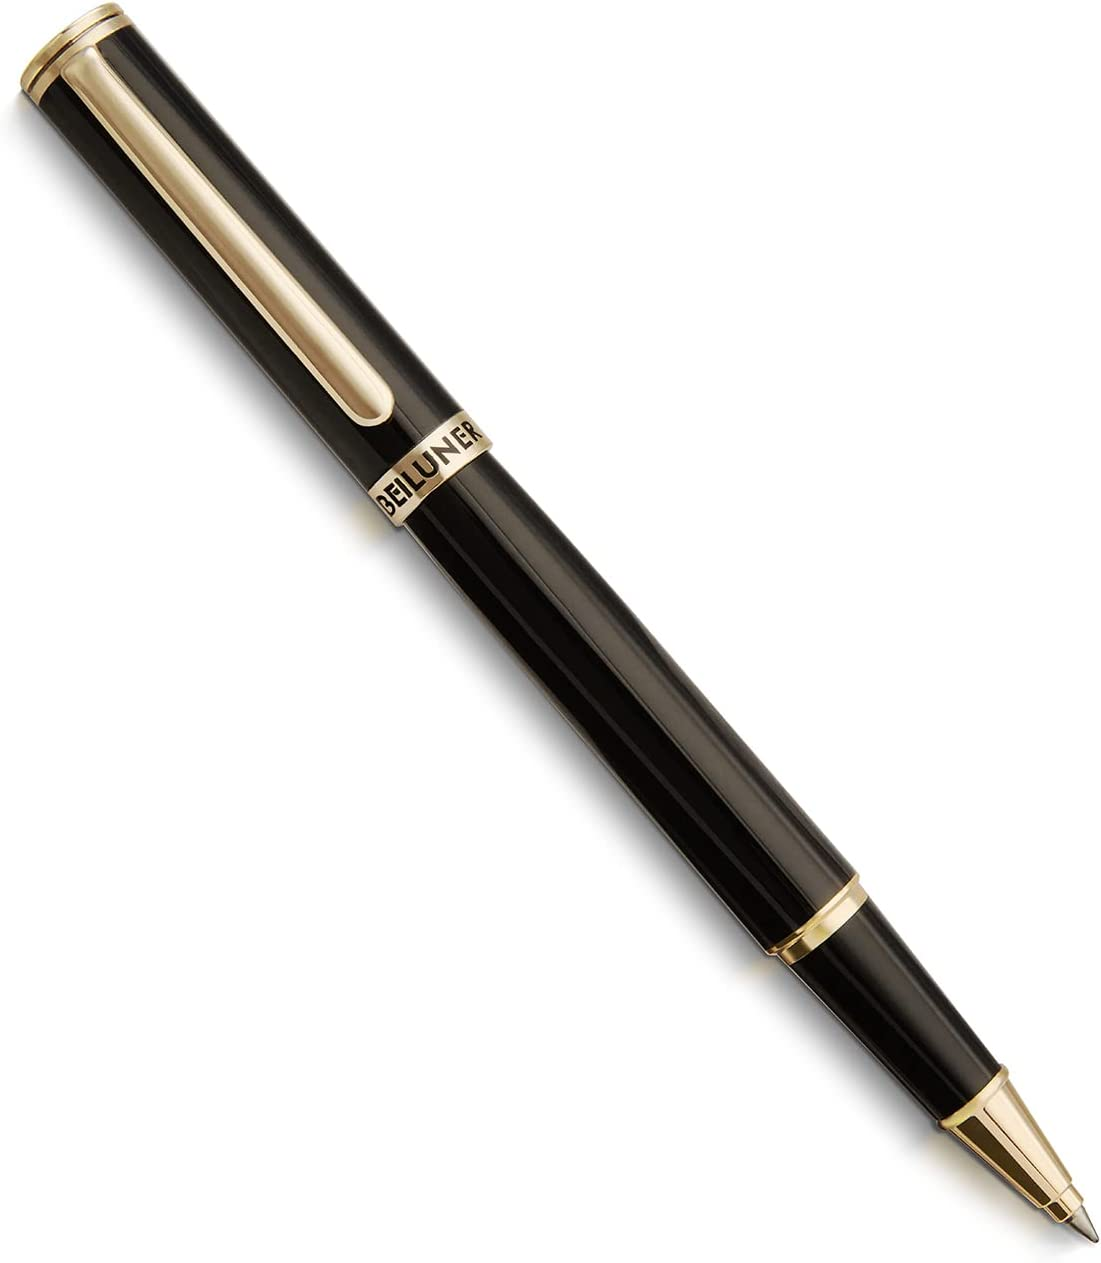 BEILUNER Luxury Rollerball Pen,24K Gold Trim,Noble and Elegant Designs,Schneider Ink Refill, Best Roller Ball Pen Gift Set for Men & Women, Professional, Executive Office, Nice Pens